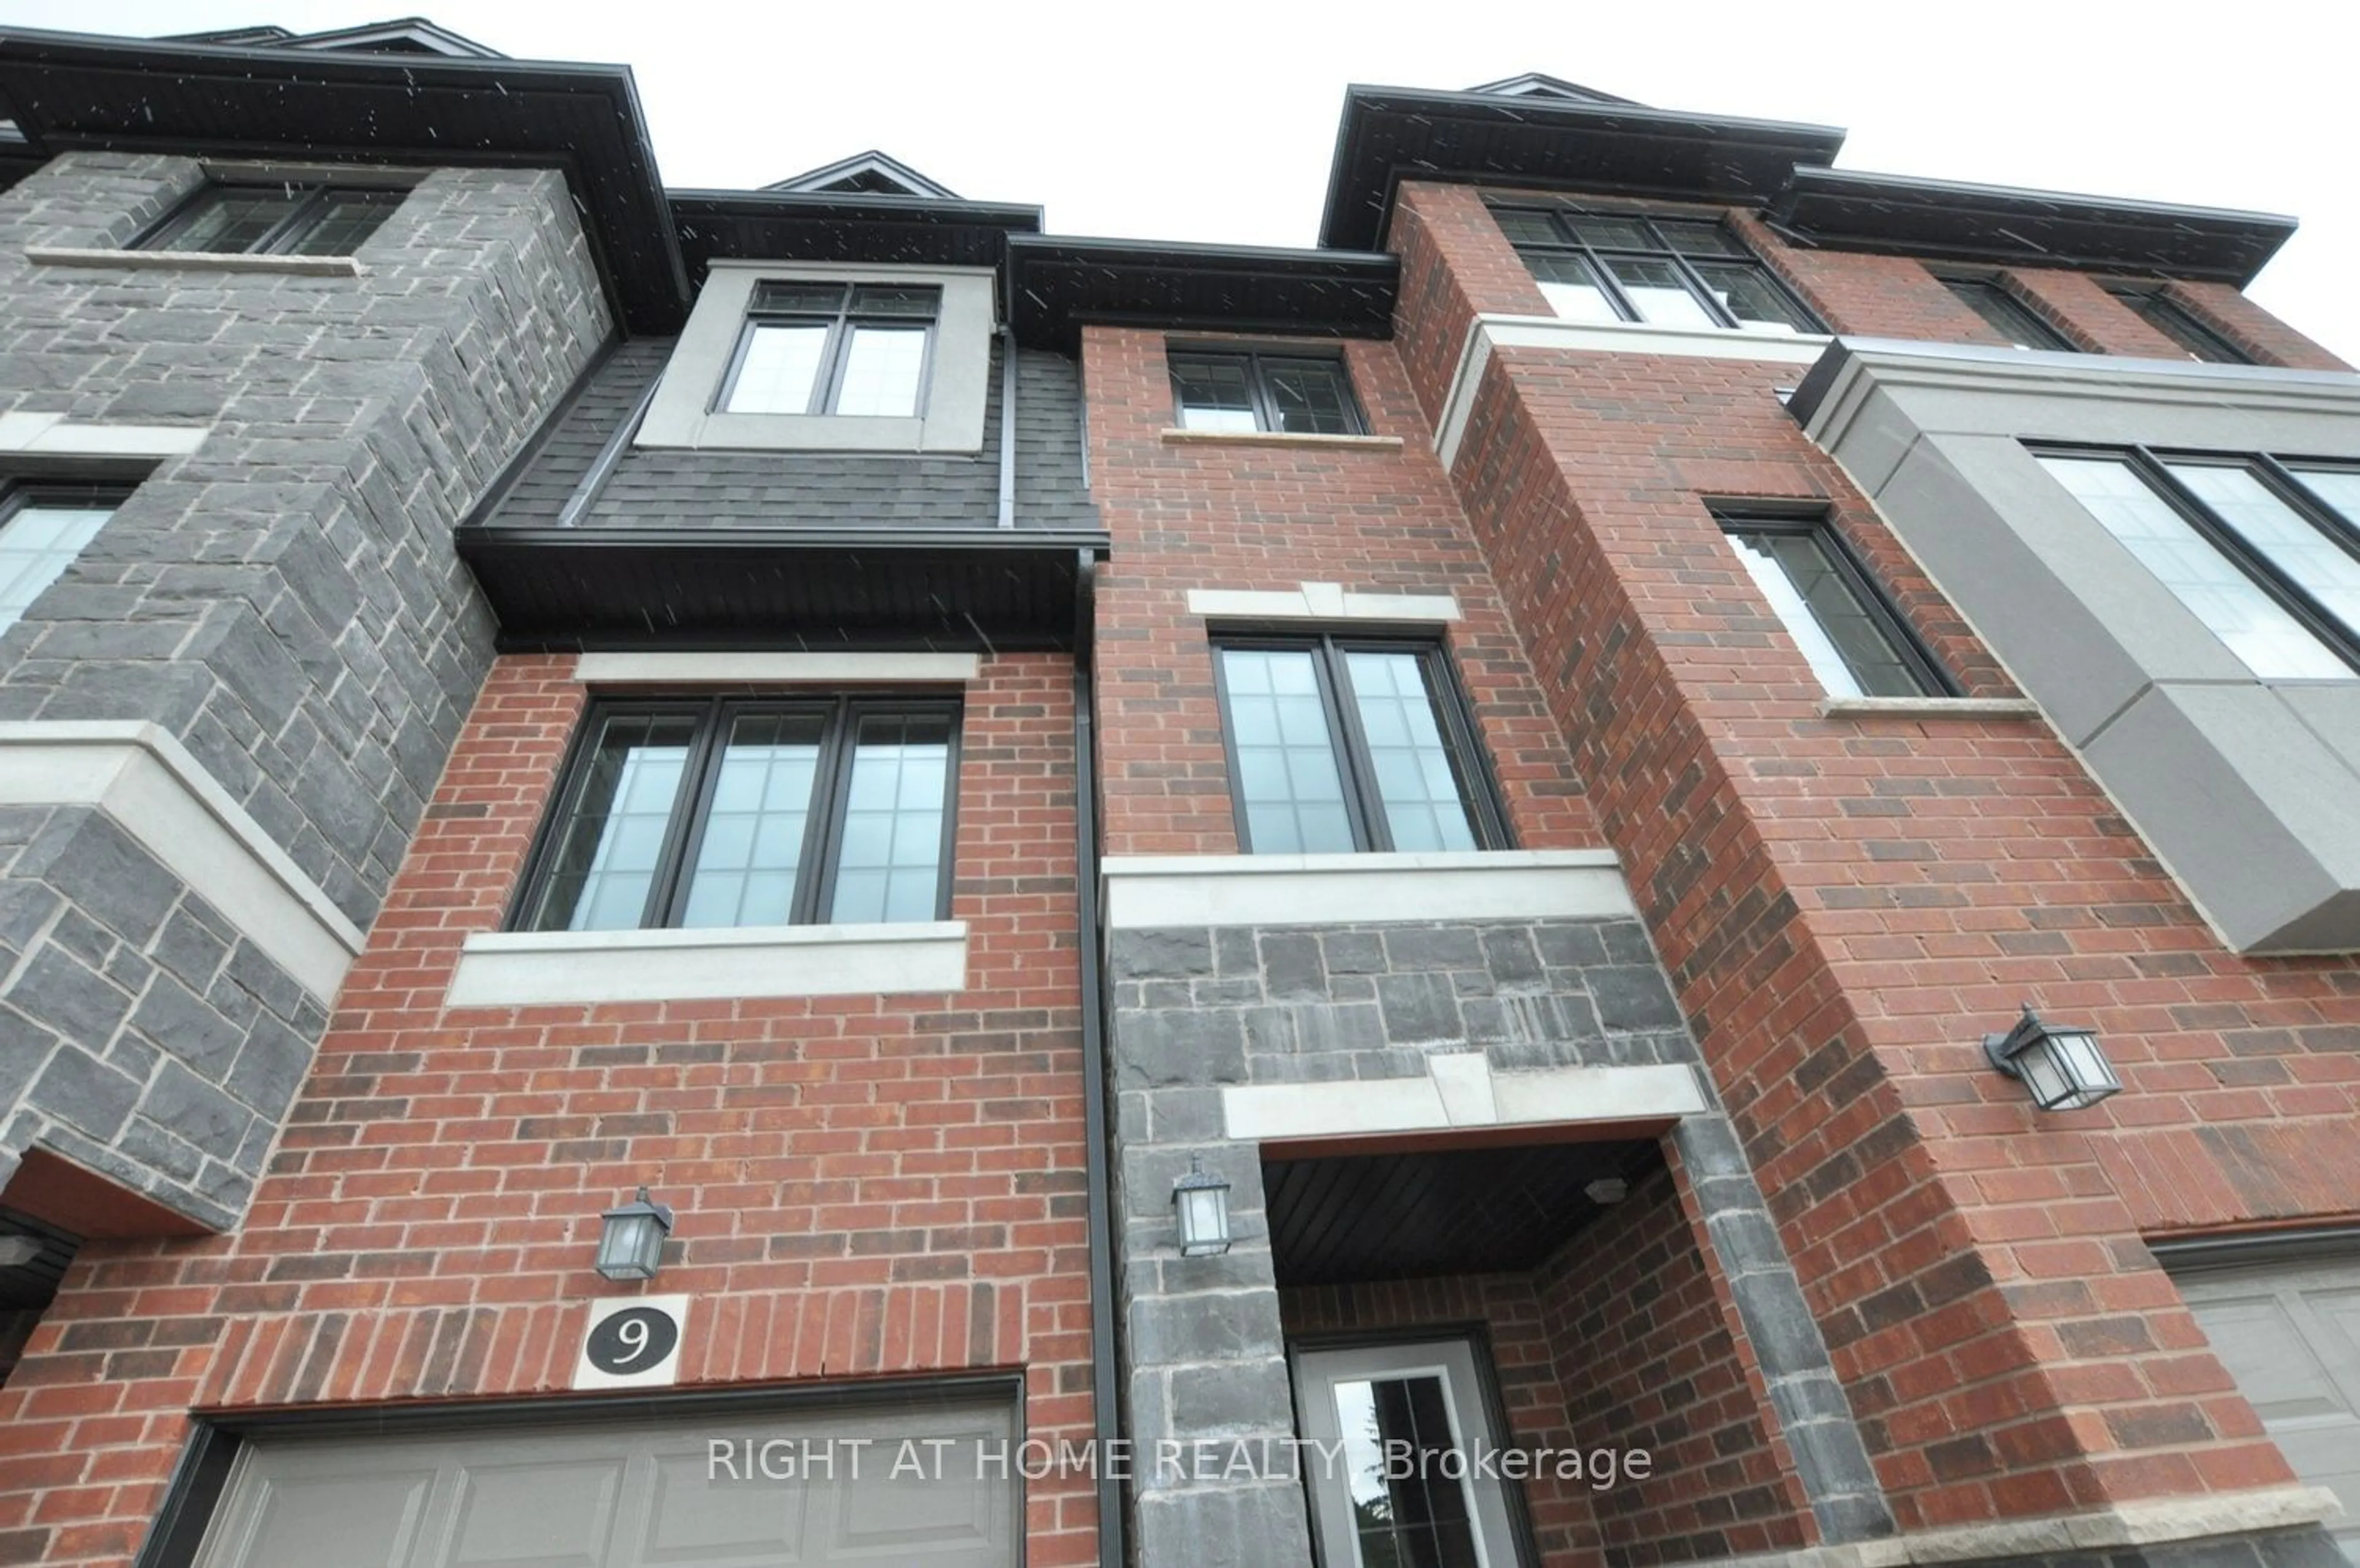 Home with brick exterior material for 9 Ridgemount St, Kitchener Ontario N2P 0J2